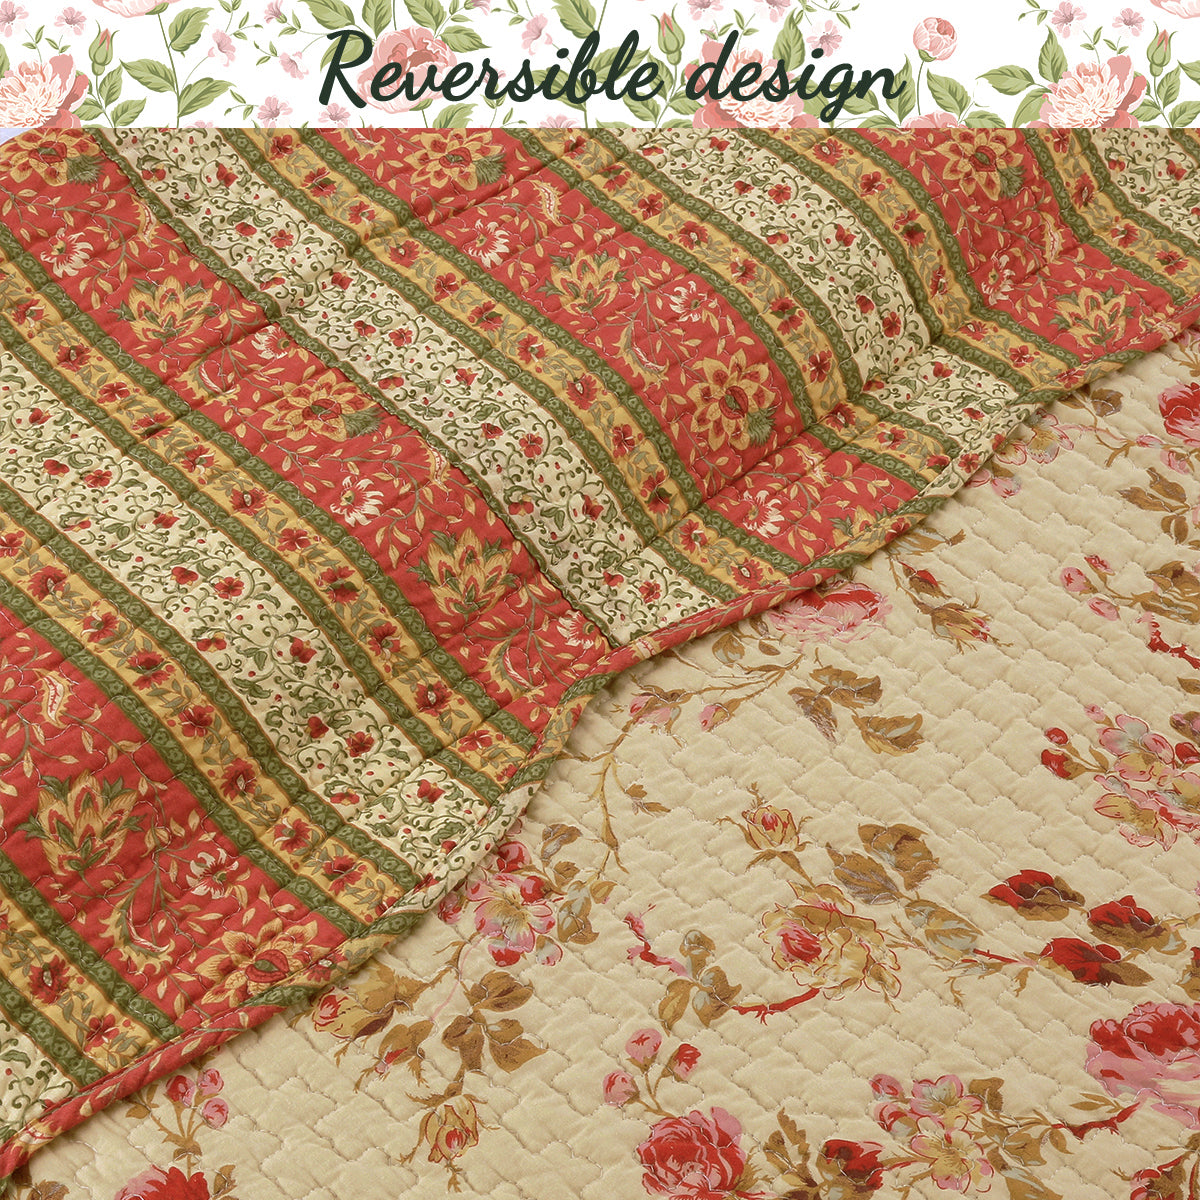 Vintage Rose Floral Cotton Quilted Scalloped 3-Piece Reversible Quilt Bedding Set